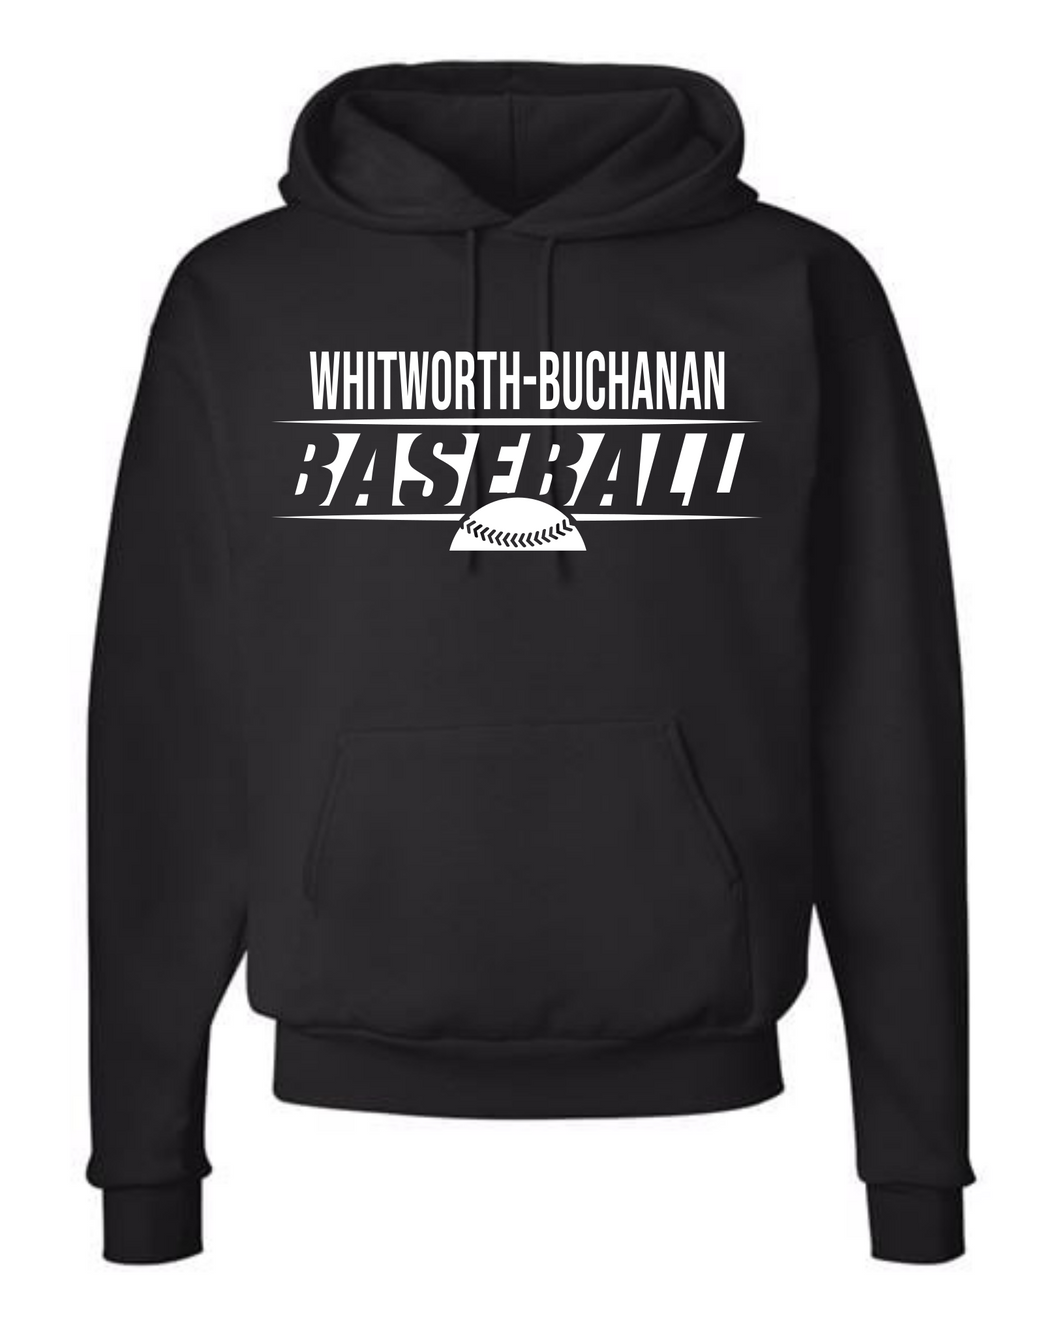 Whitworth-Buchanan Half Baseball Design Hoodie